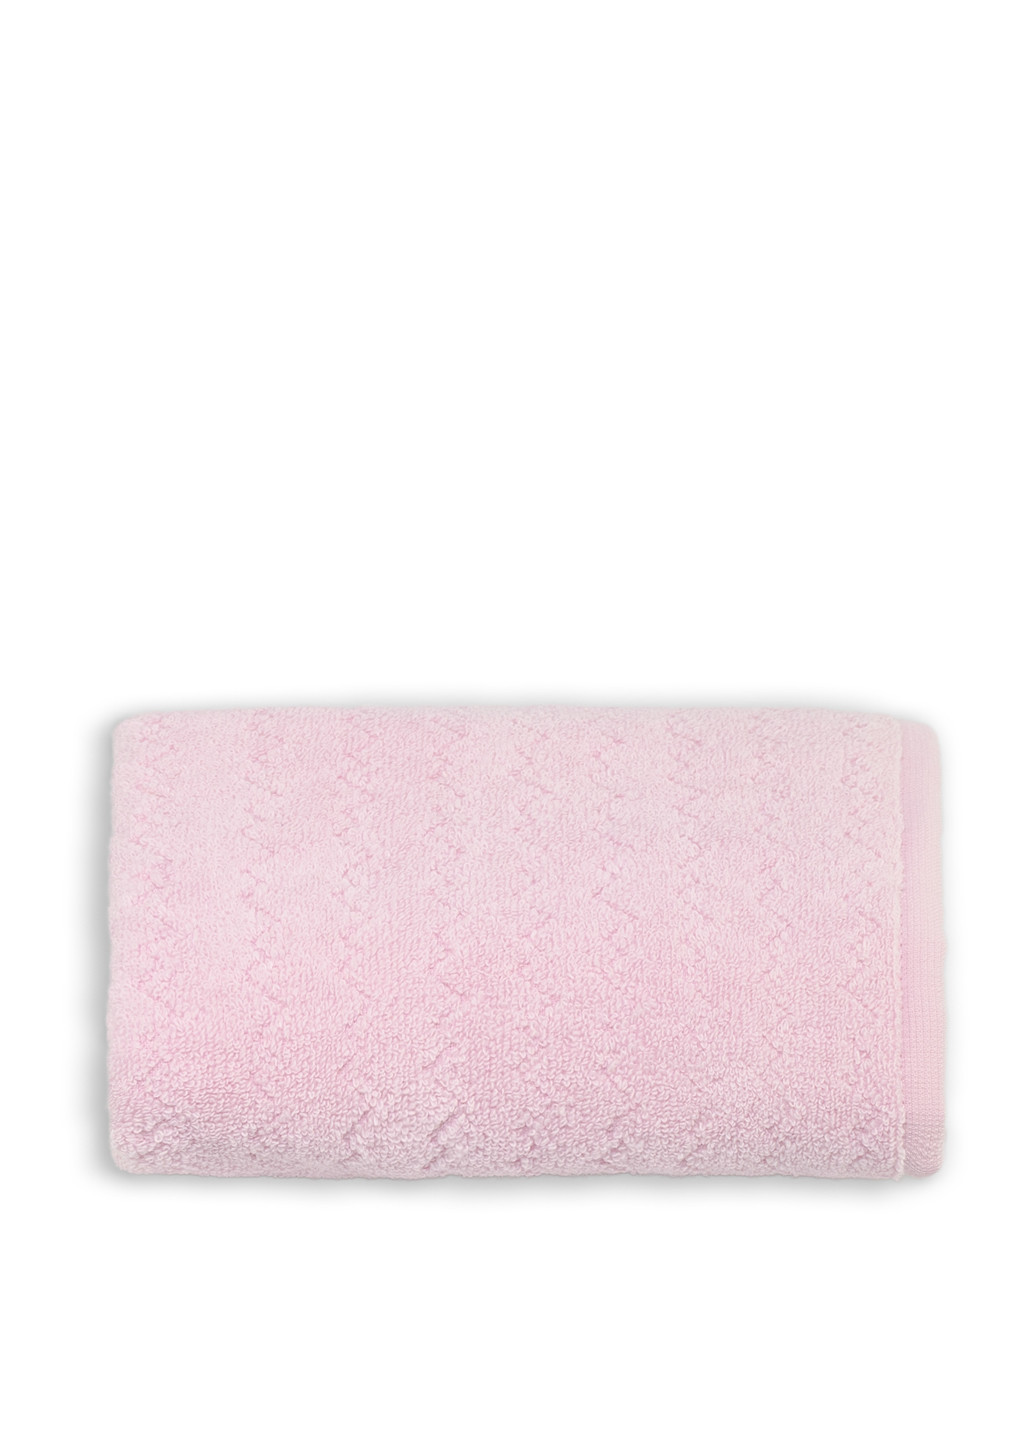 No Brand полотенце, 50х90 см однотонный светло-розовый производство - Турция